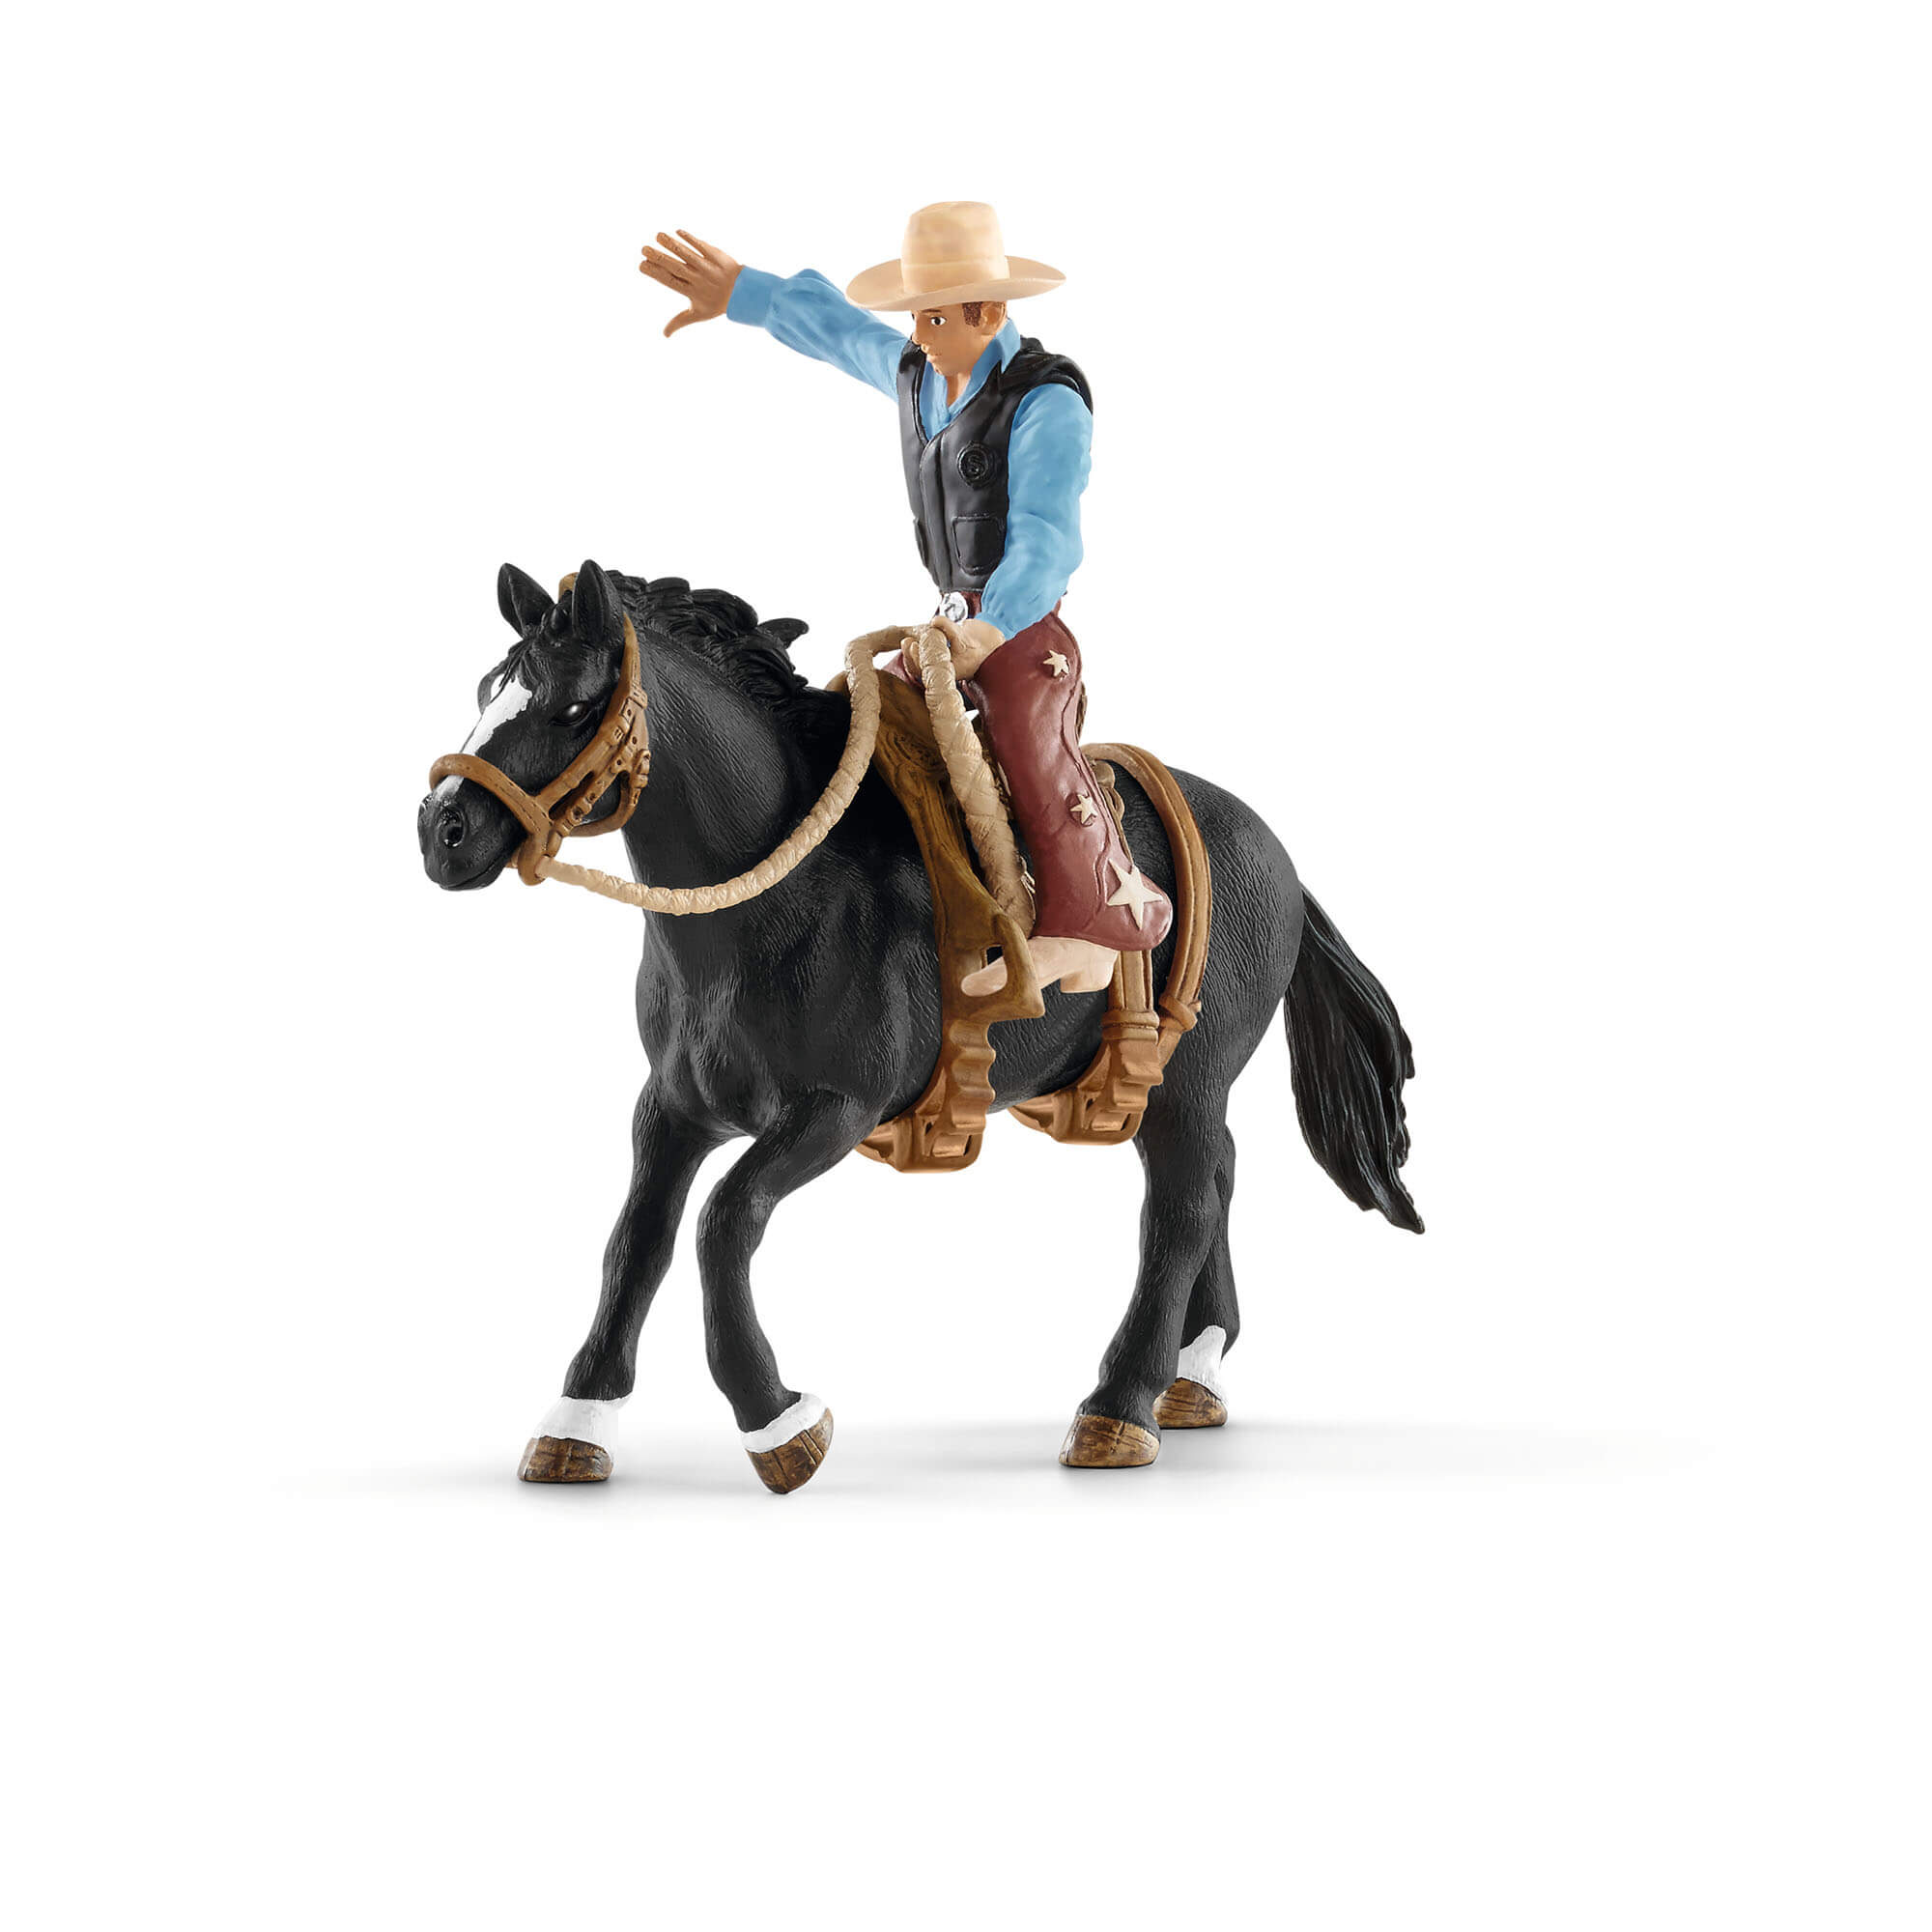 Schleich Farm World Saddle Bronc Riding With Cowboy Play Set